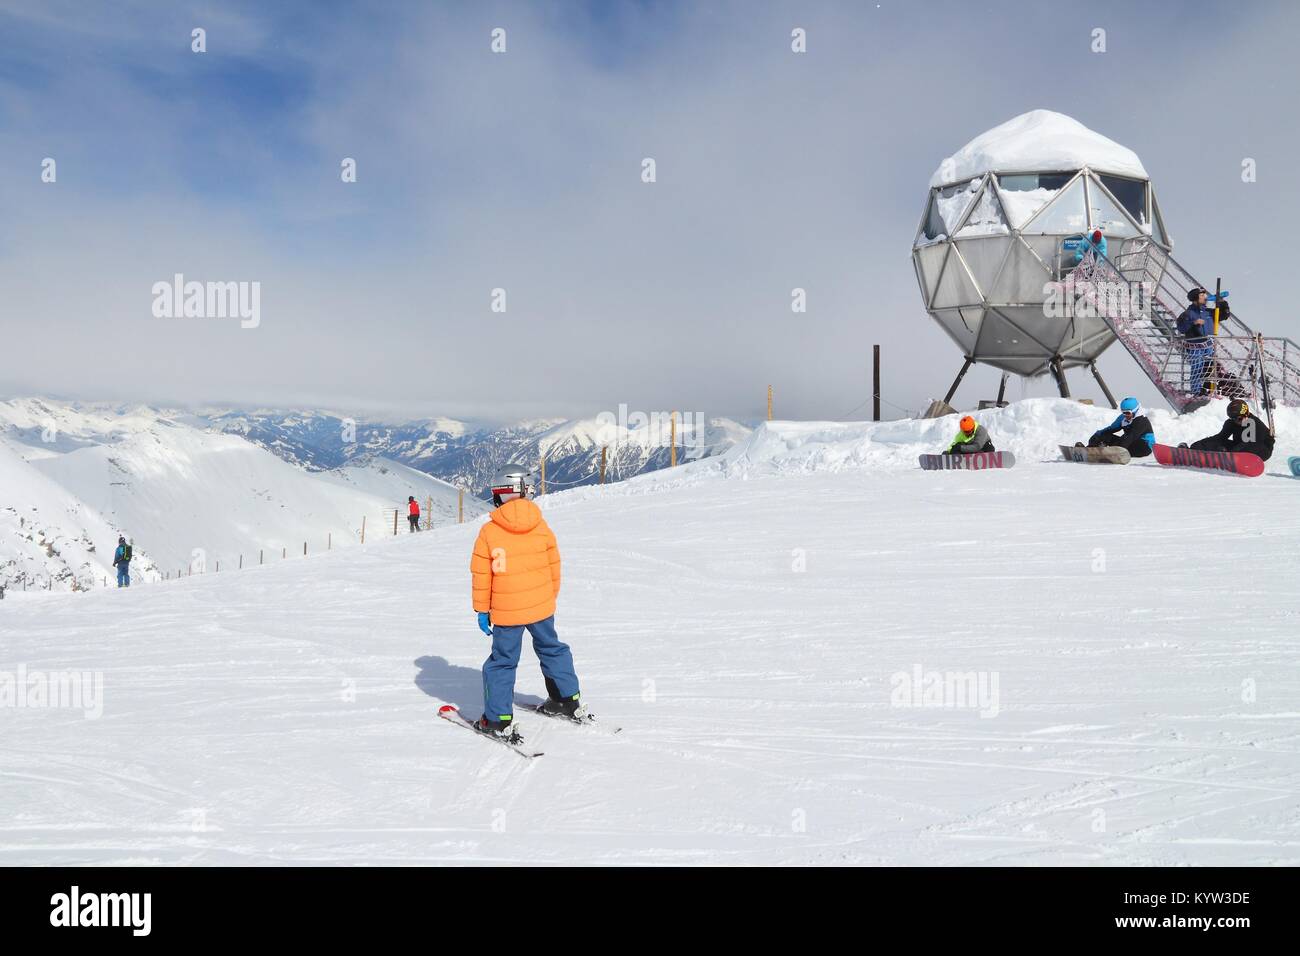 GASTEIN VALLEY, AUSTRIA - MARCH 10, 2016: People visit Sportgastein ski resort in Austria. It is part of Ski Amade, one of largest ski regions in Euro Stock Photo